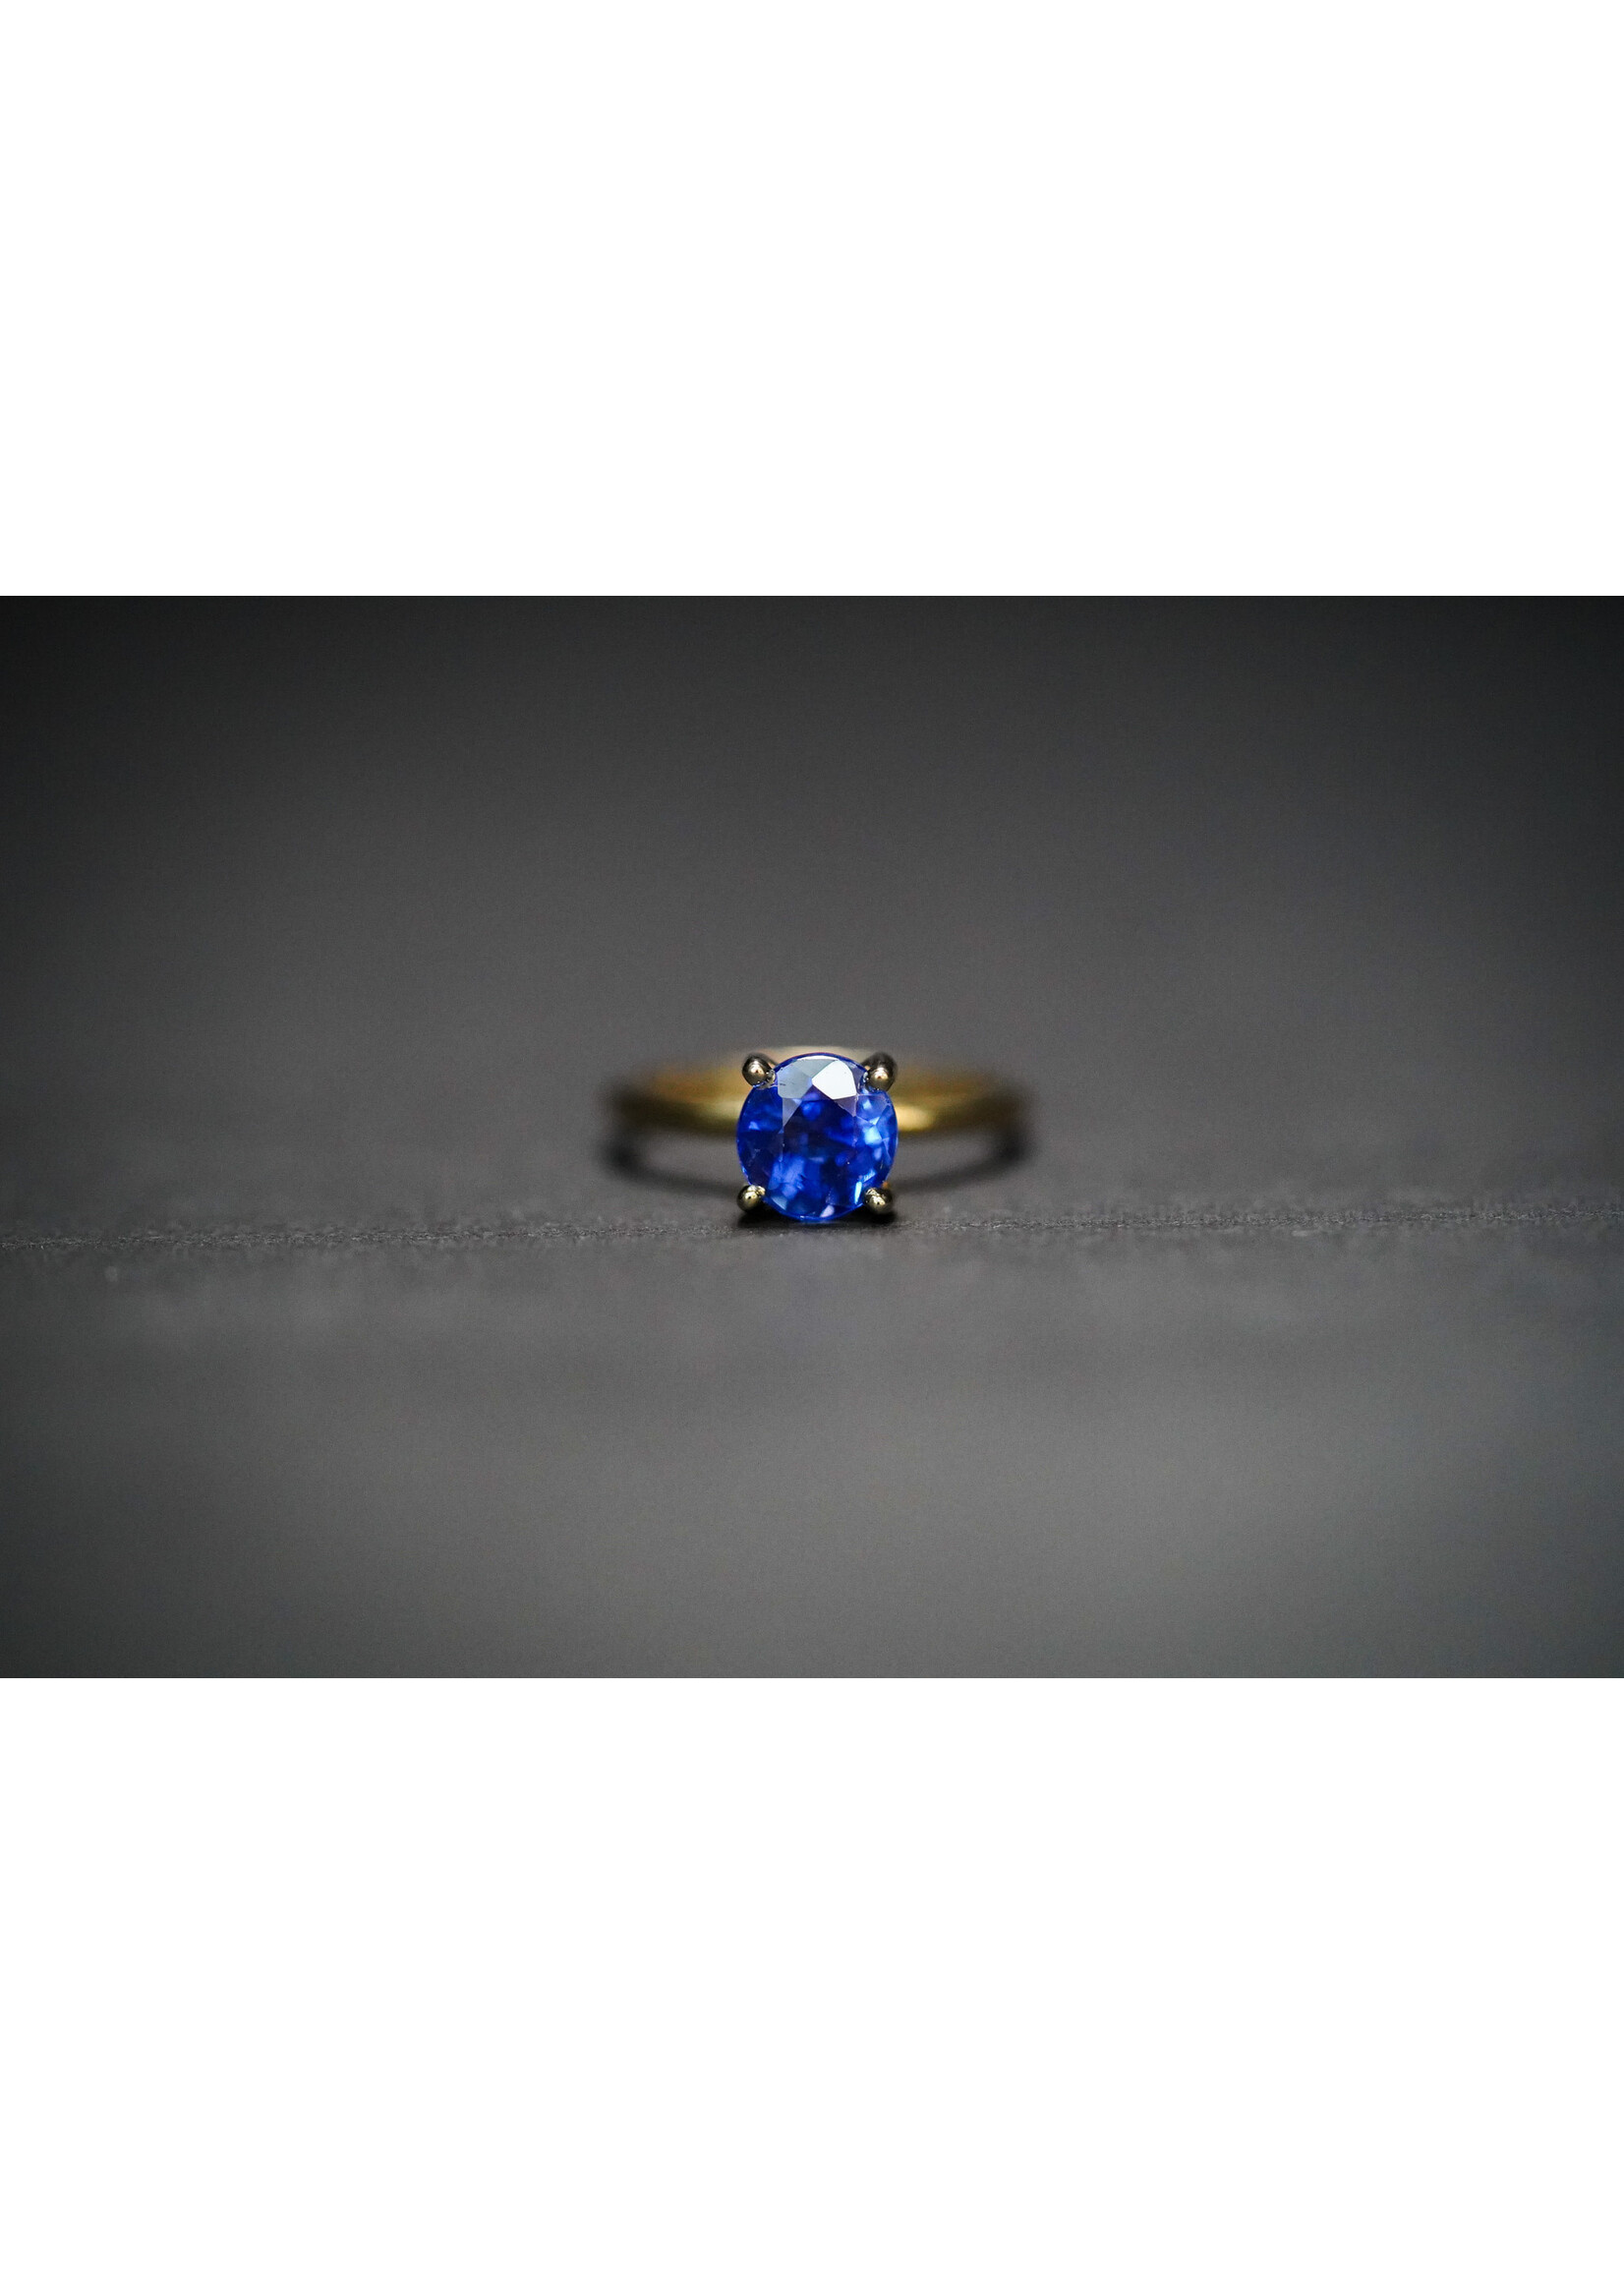 14KY 3.00g 2.68ct No Heat Burma Blue Sapphire Fashion Ring (size 7)